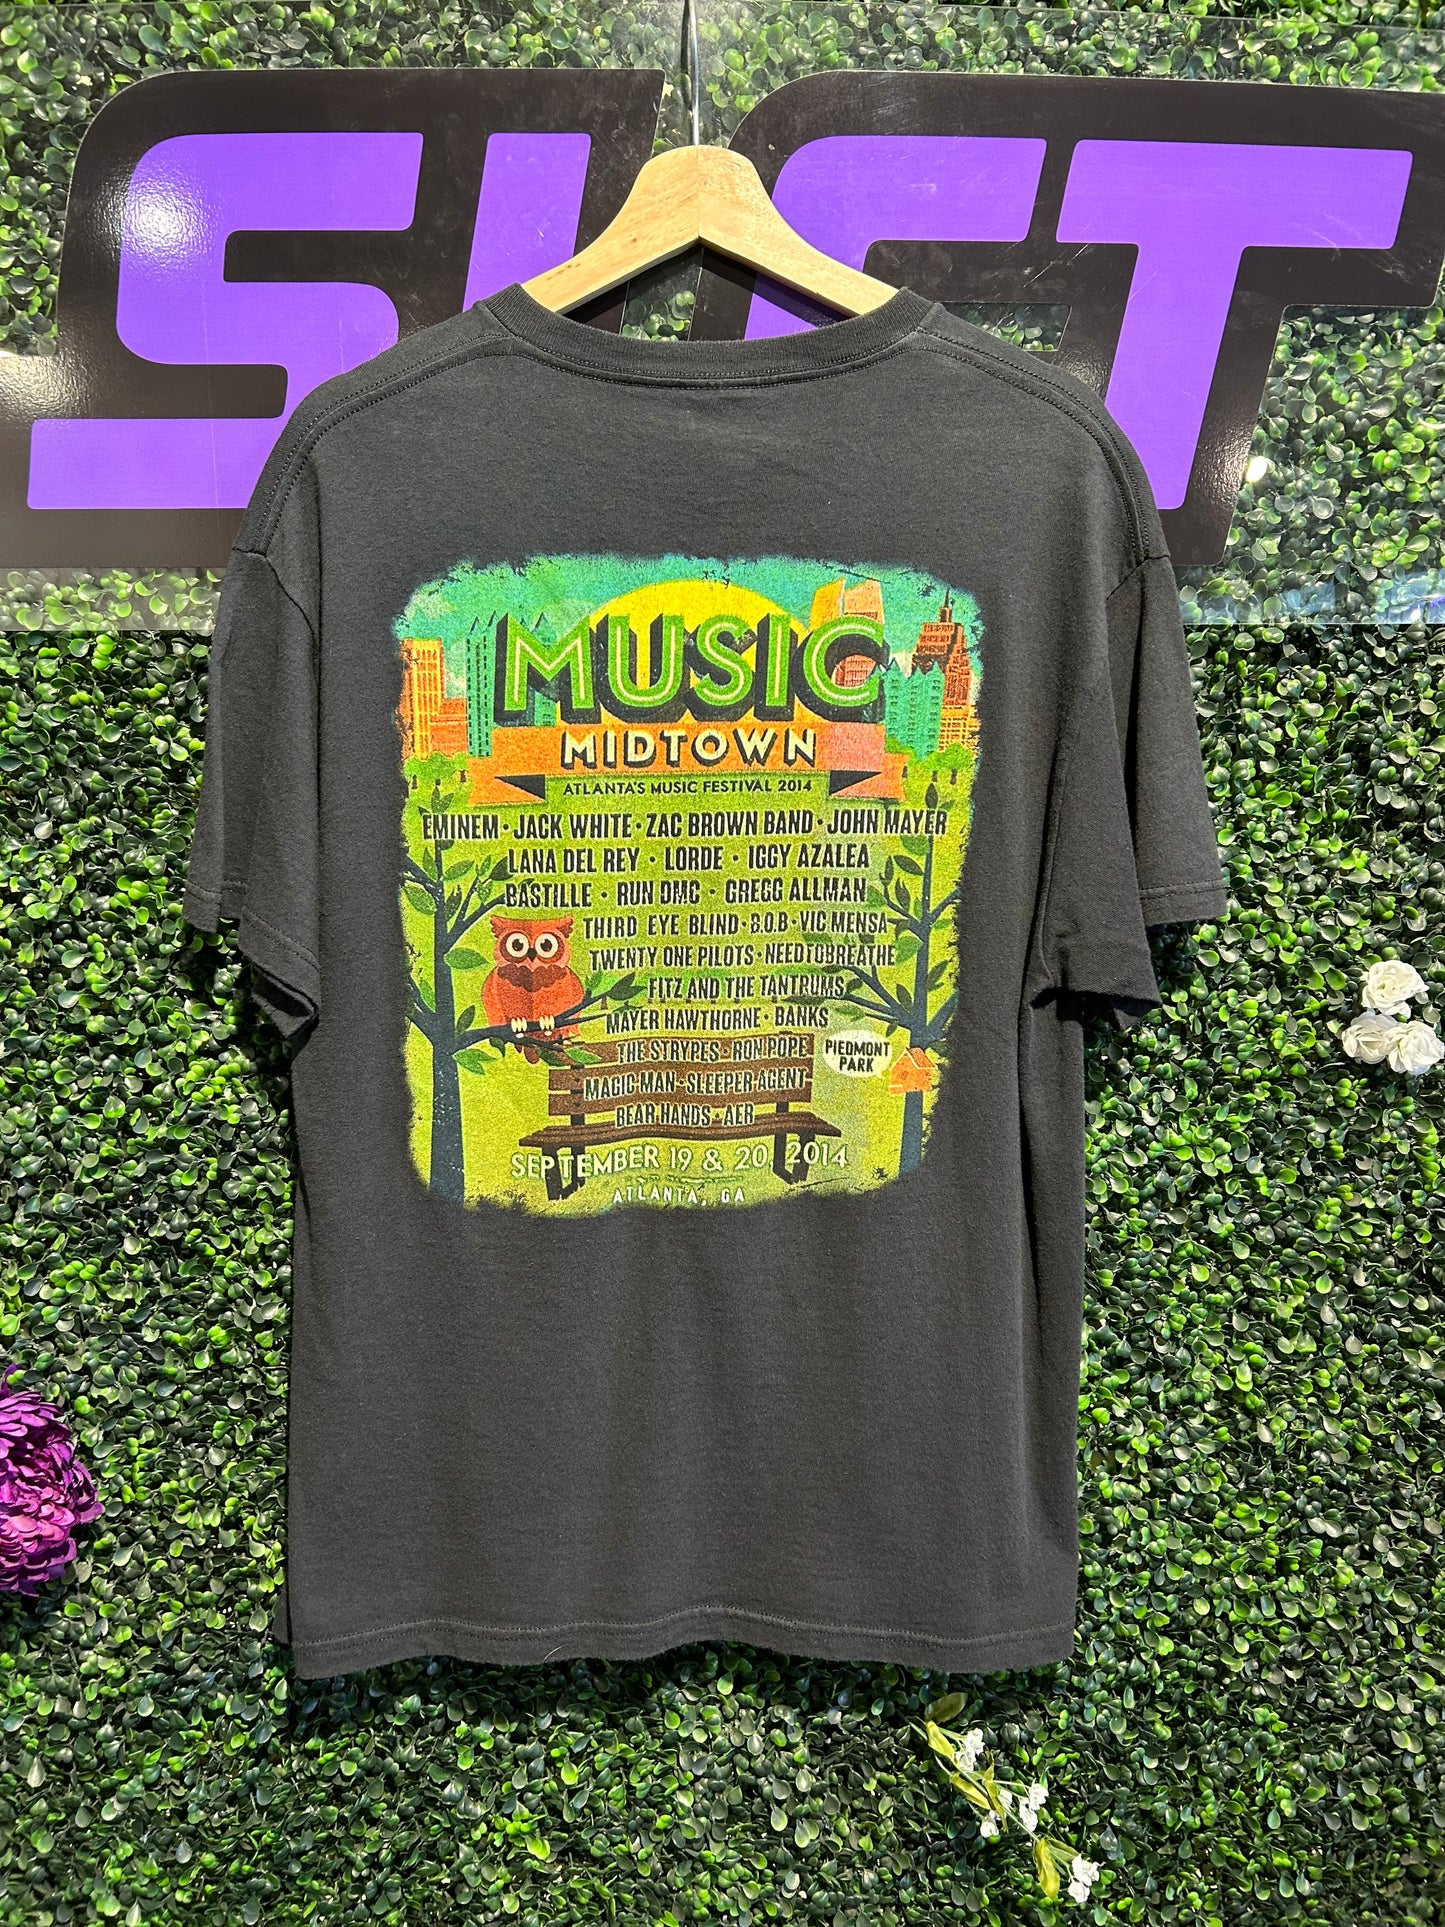 2014 Music Midtown Atlanta Music Festival T-Shirt. Size Large